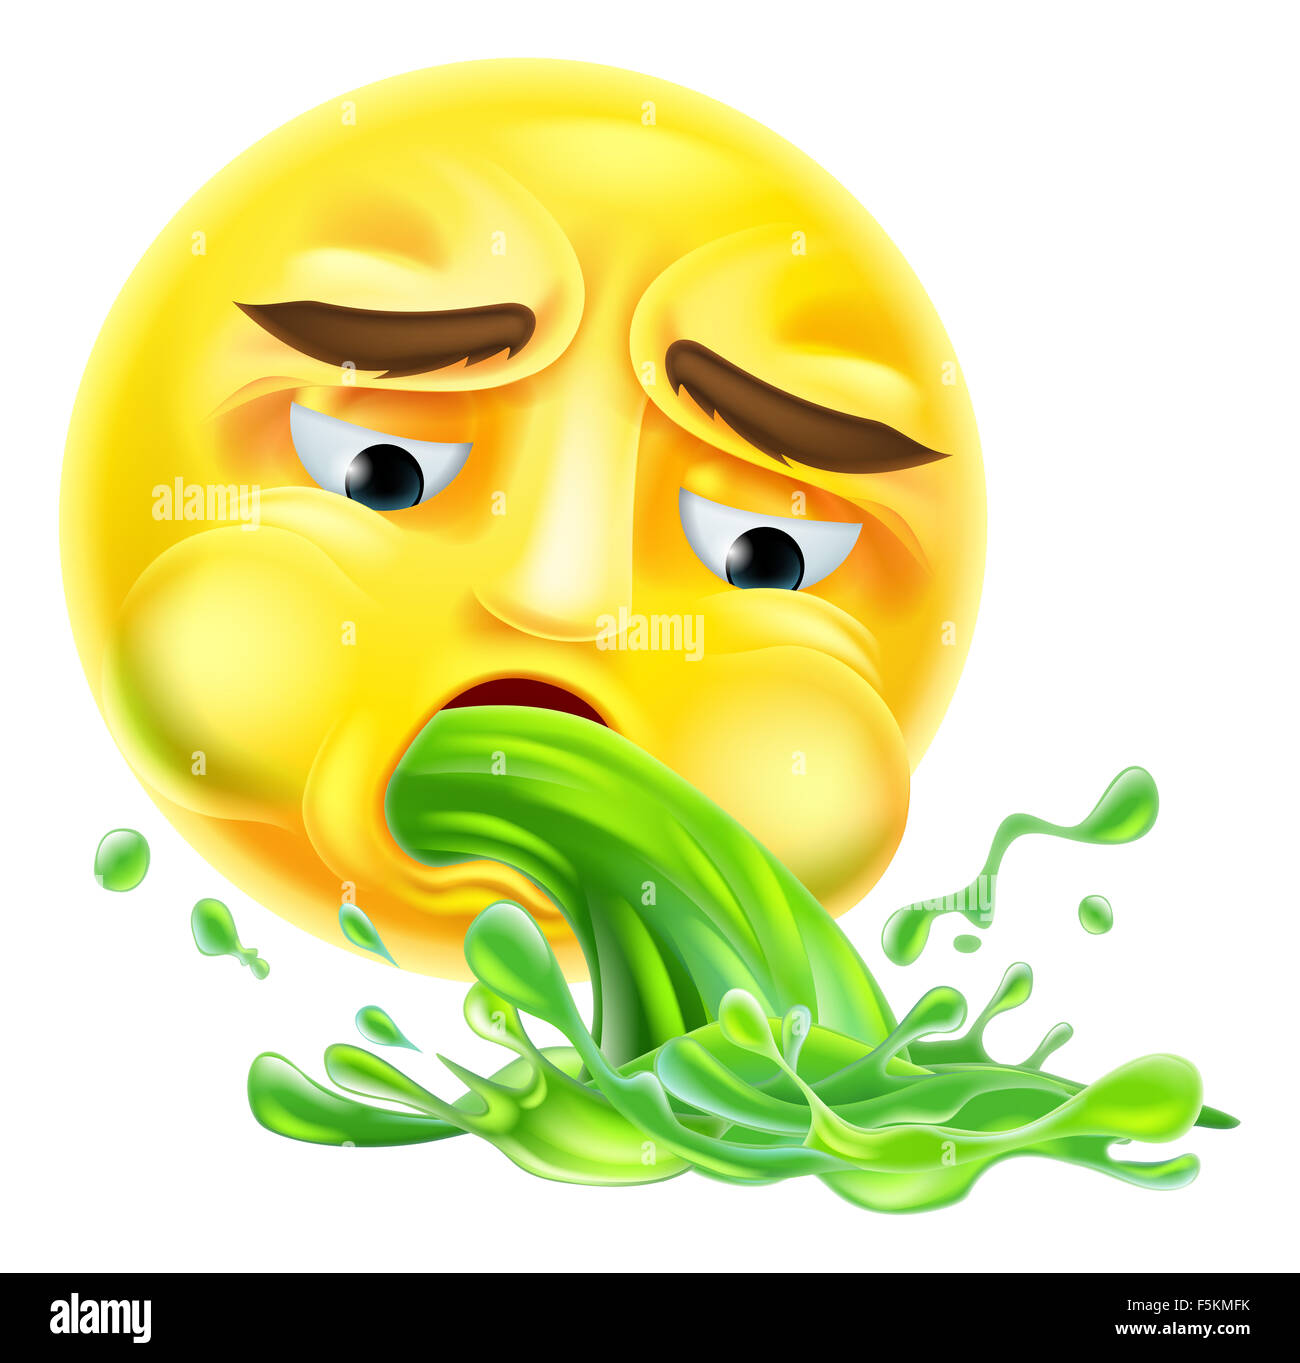 A vomiting sick ill cartoon emoji emoticon cartoon character Stock Photo